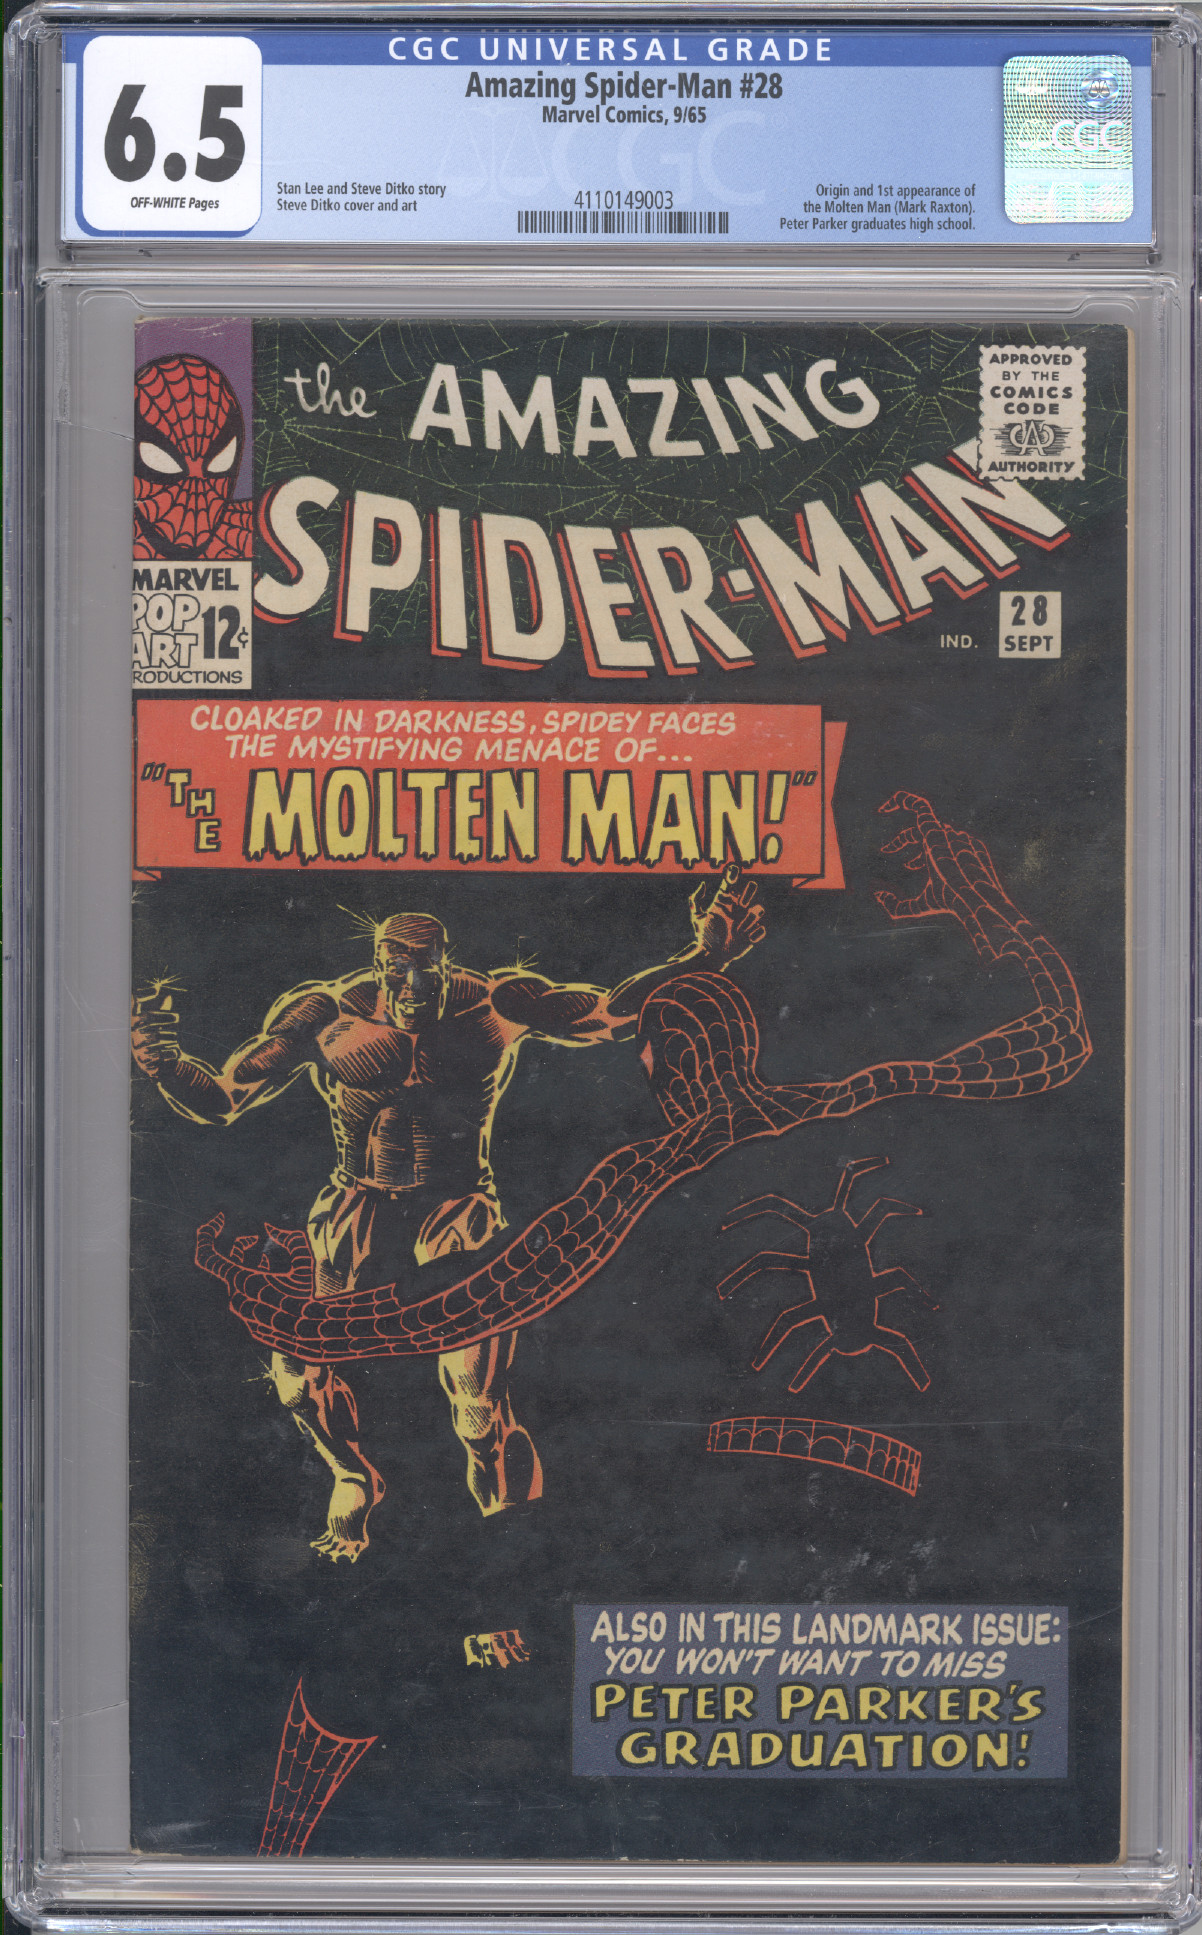 Amazing Spider-Man #28 front